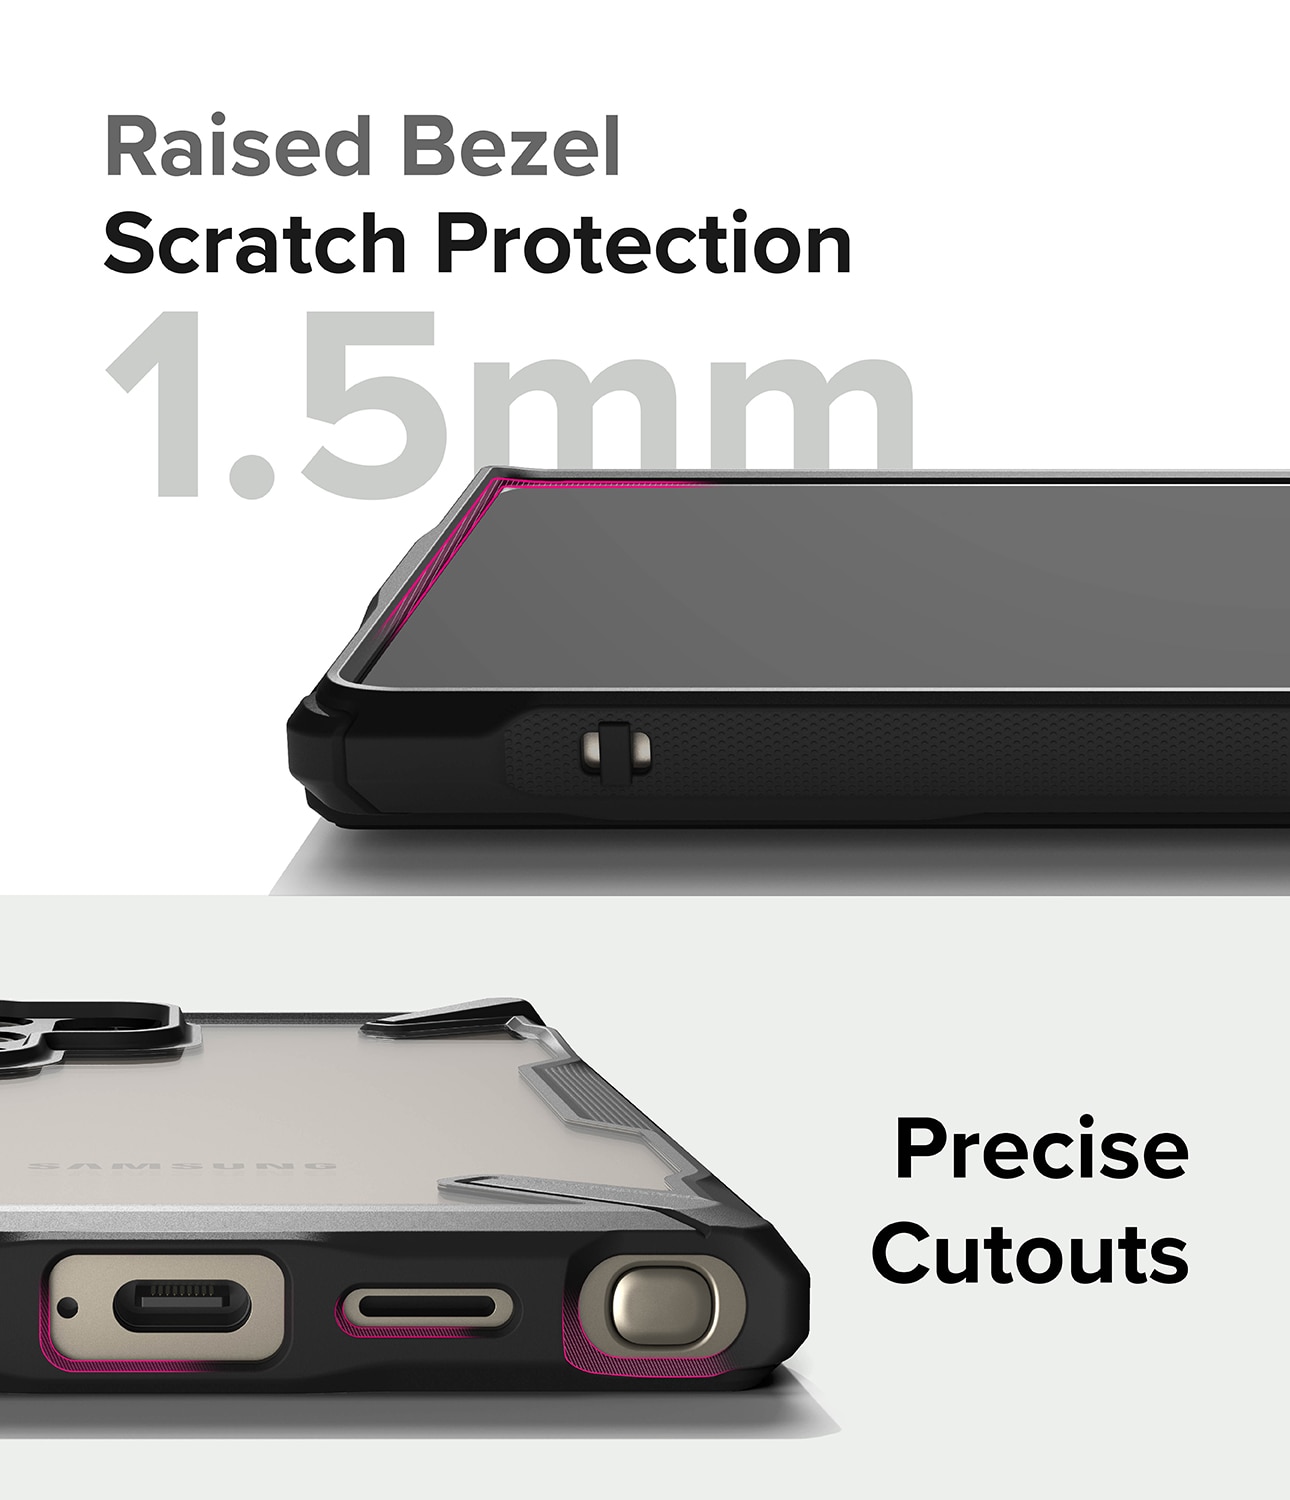 Fusion X Case Samsung Galaxy S24 Ultra sort